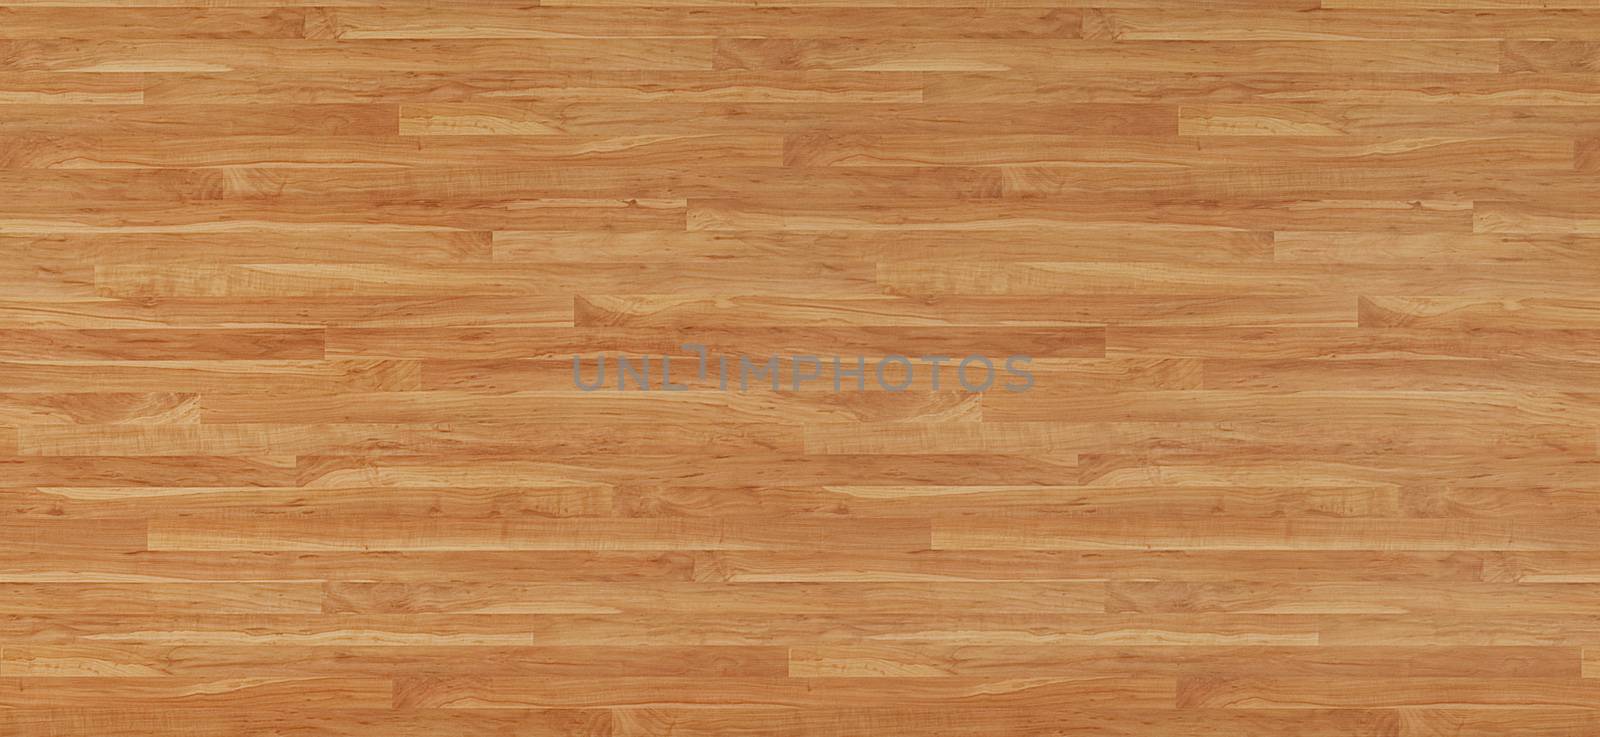 wooden parquet texture by ivo_13